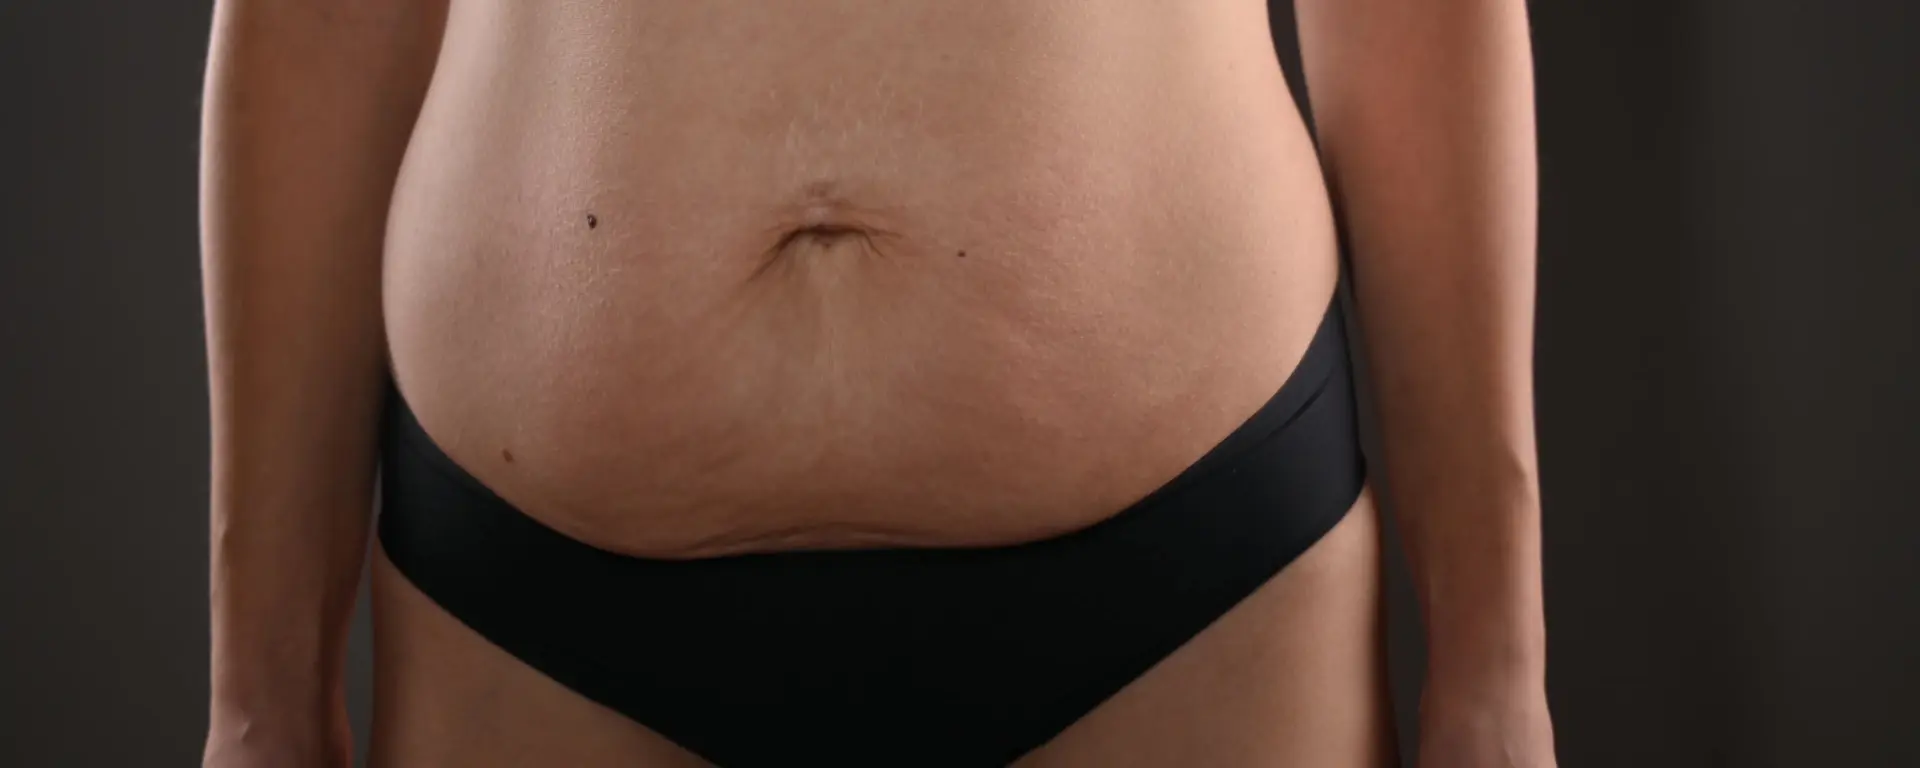 woman's belly Diastasis Recti before and after diastasis recti exercises to heal